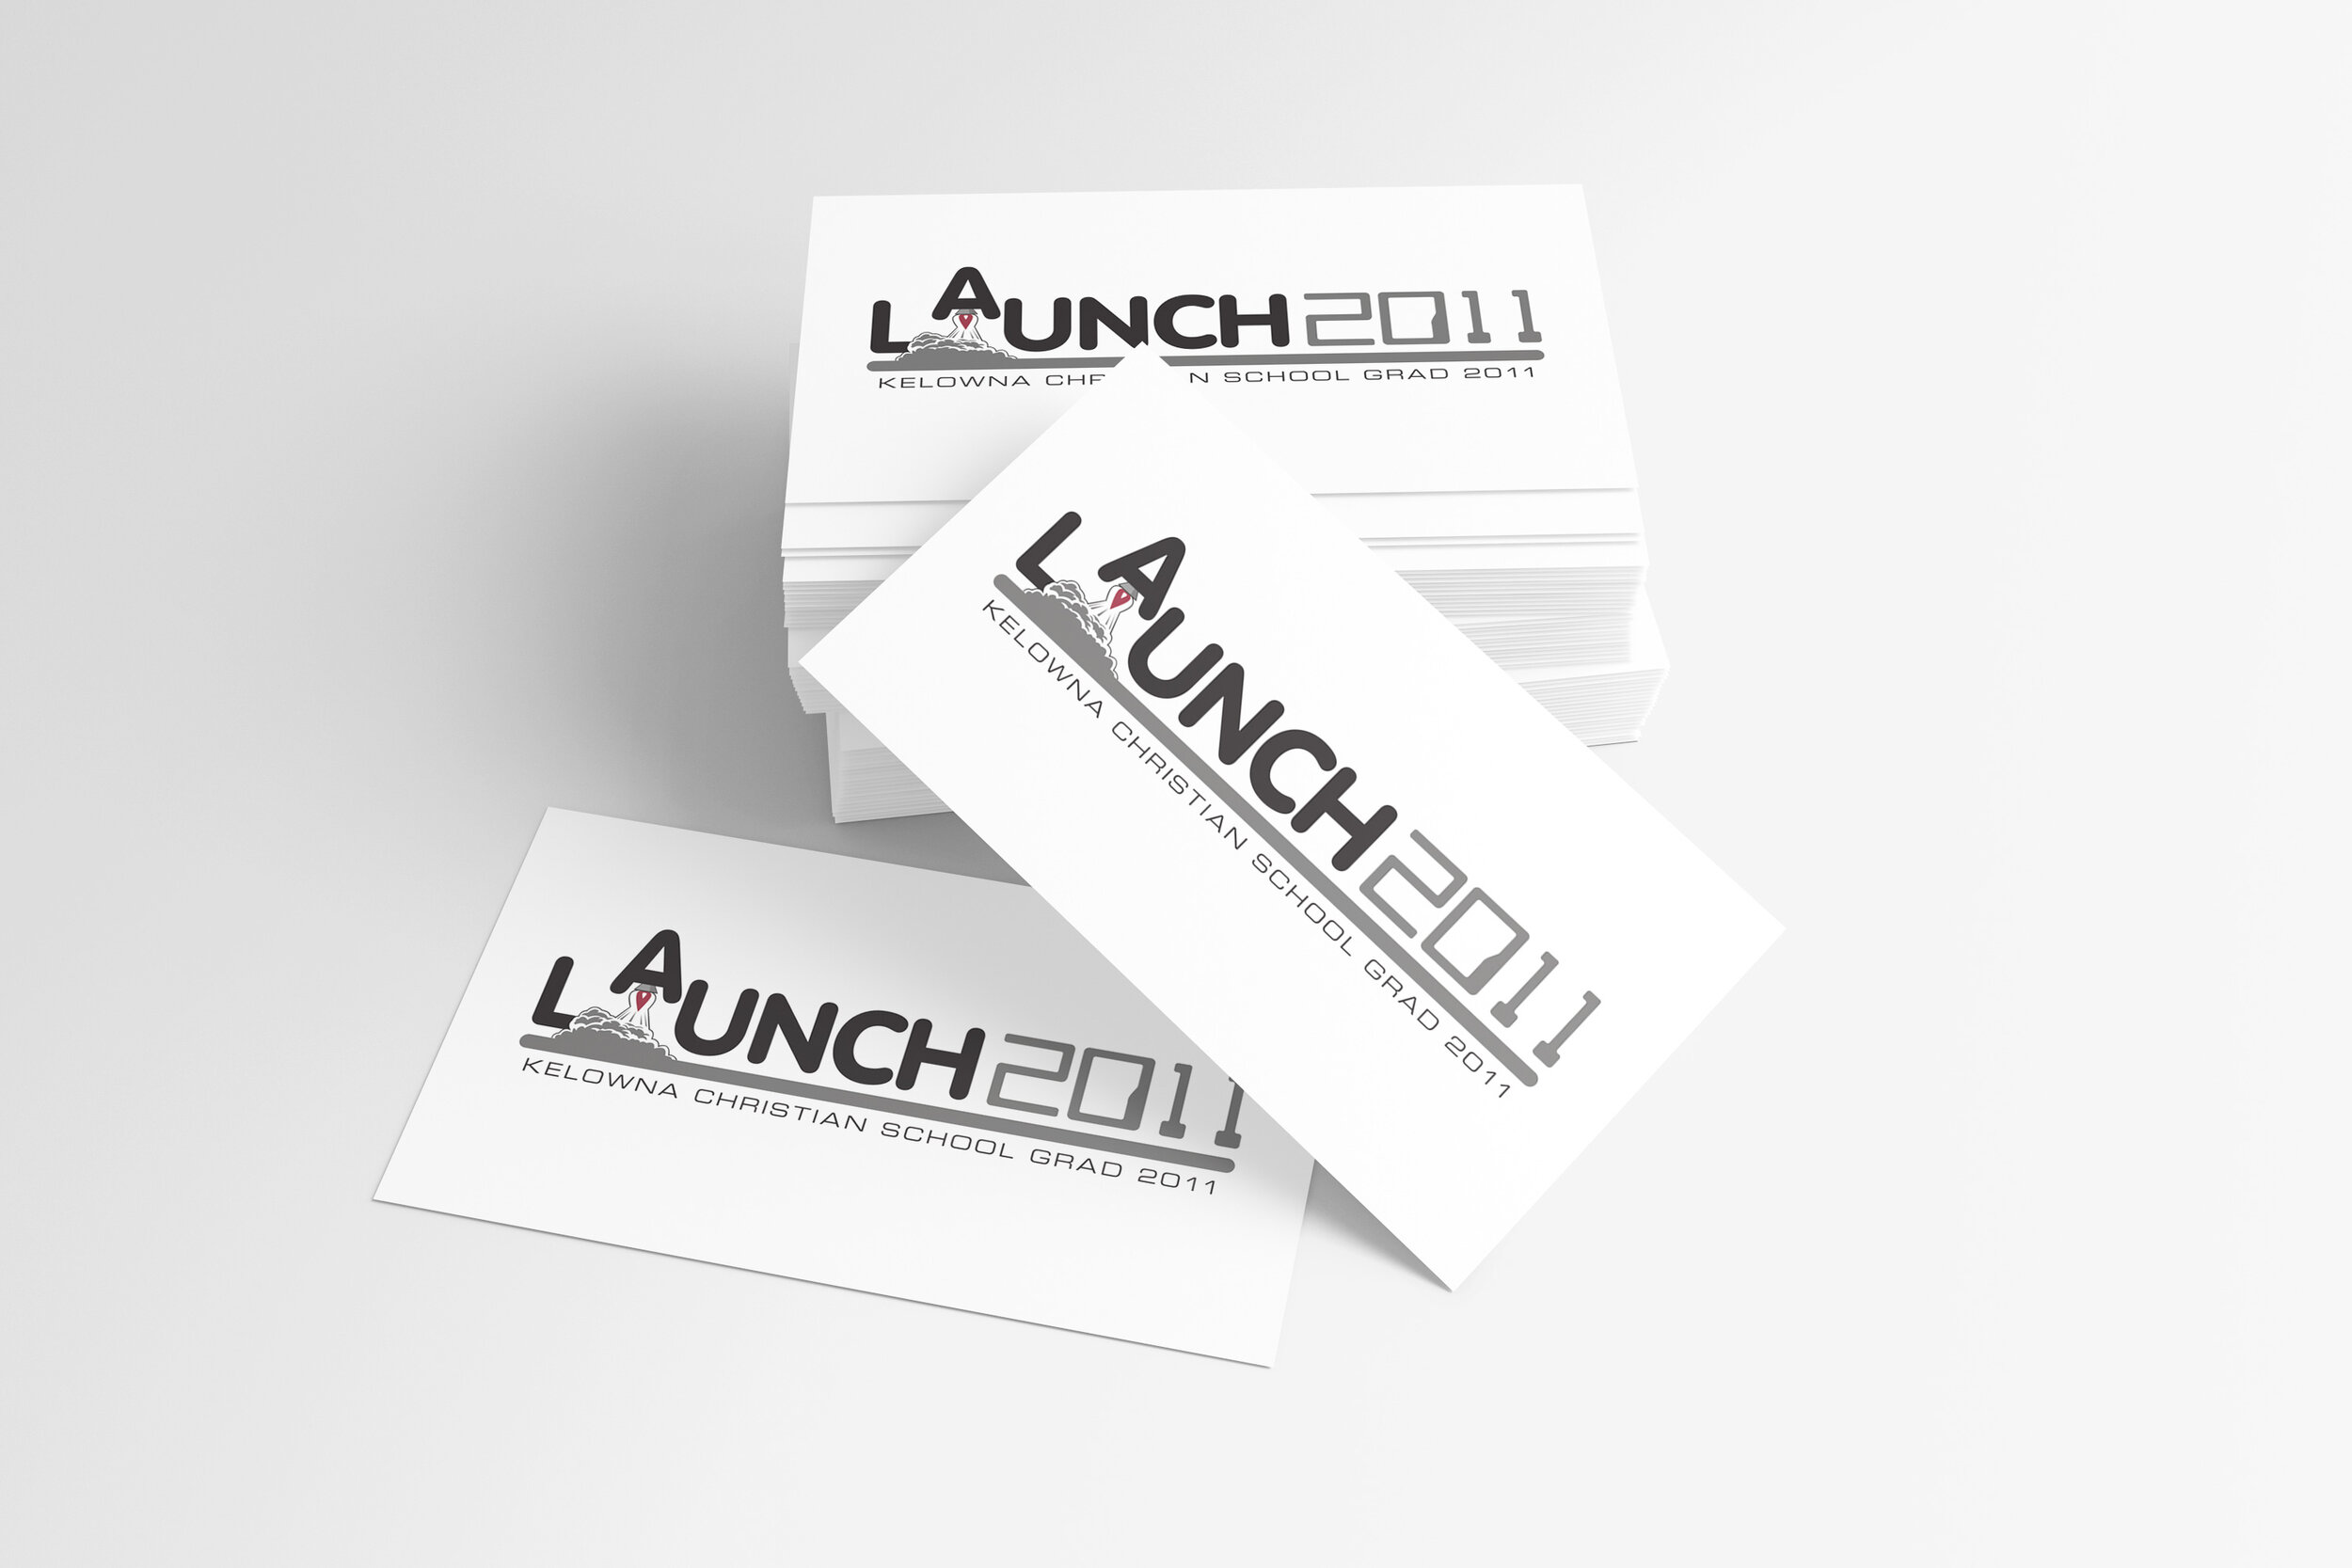 launch-2011.jpg